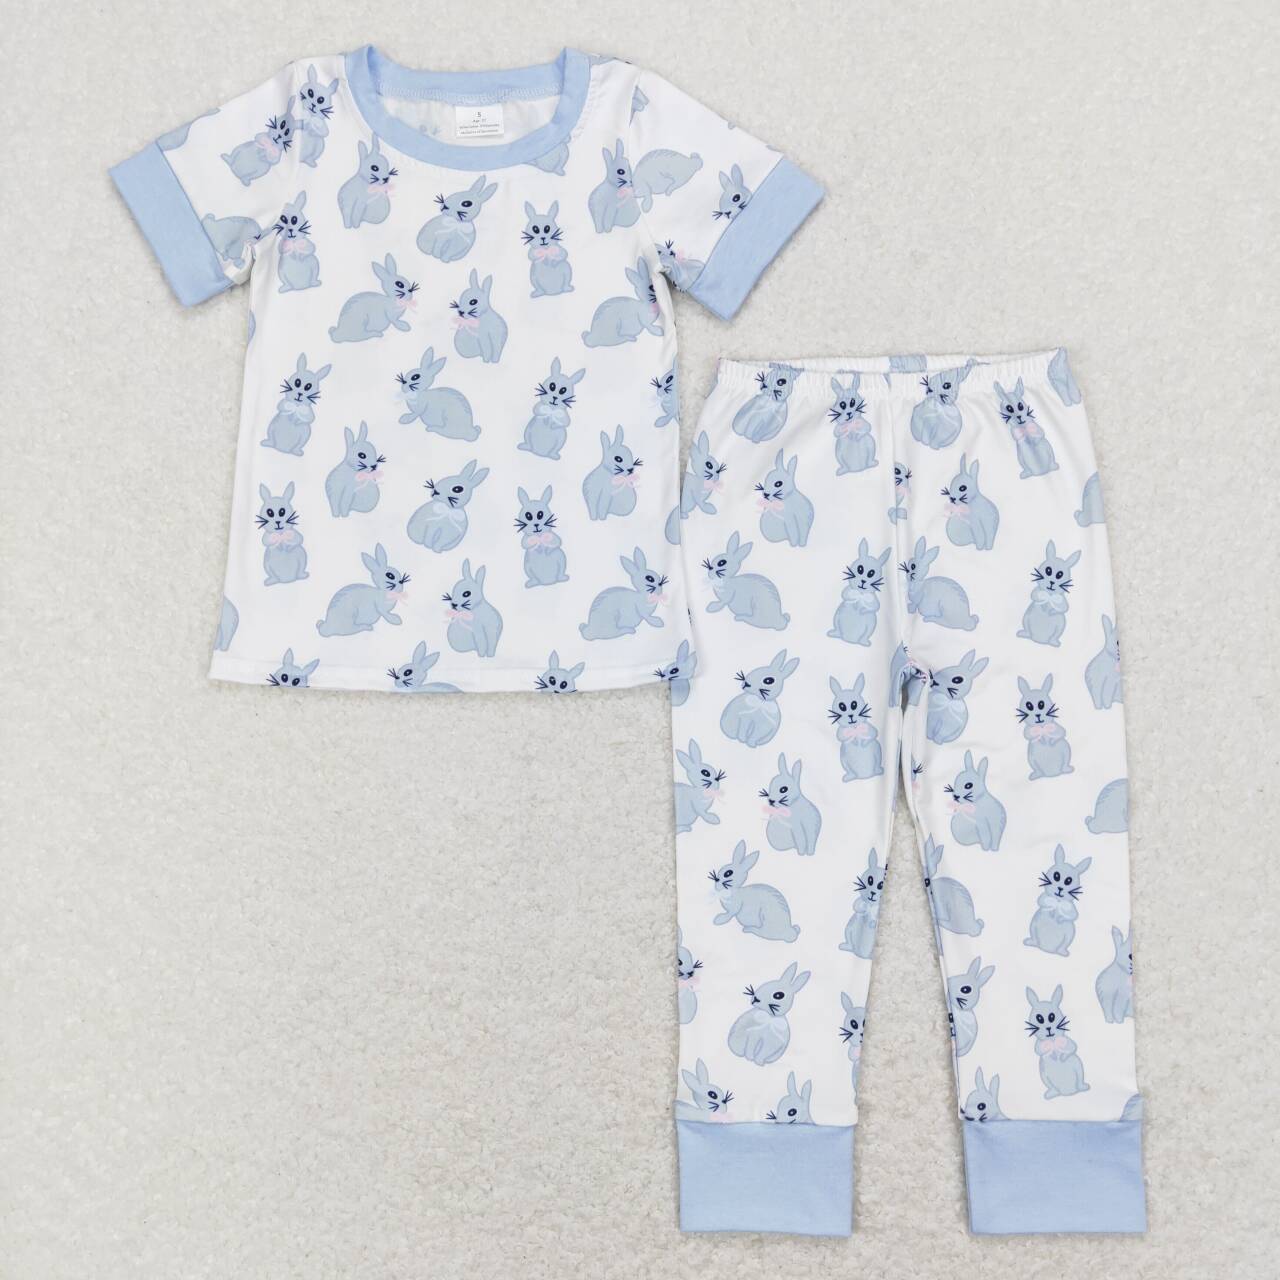 BSPO0237 Blue Bunny Print Boys Easter Pajamas Clothes Set